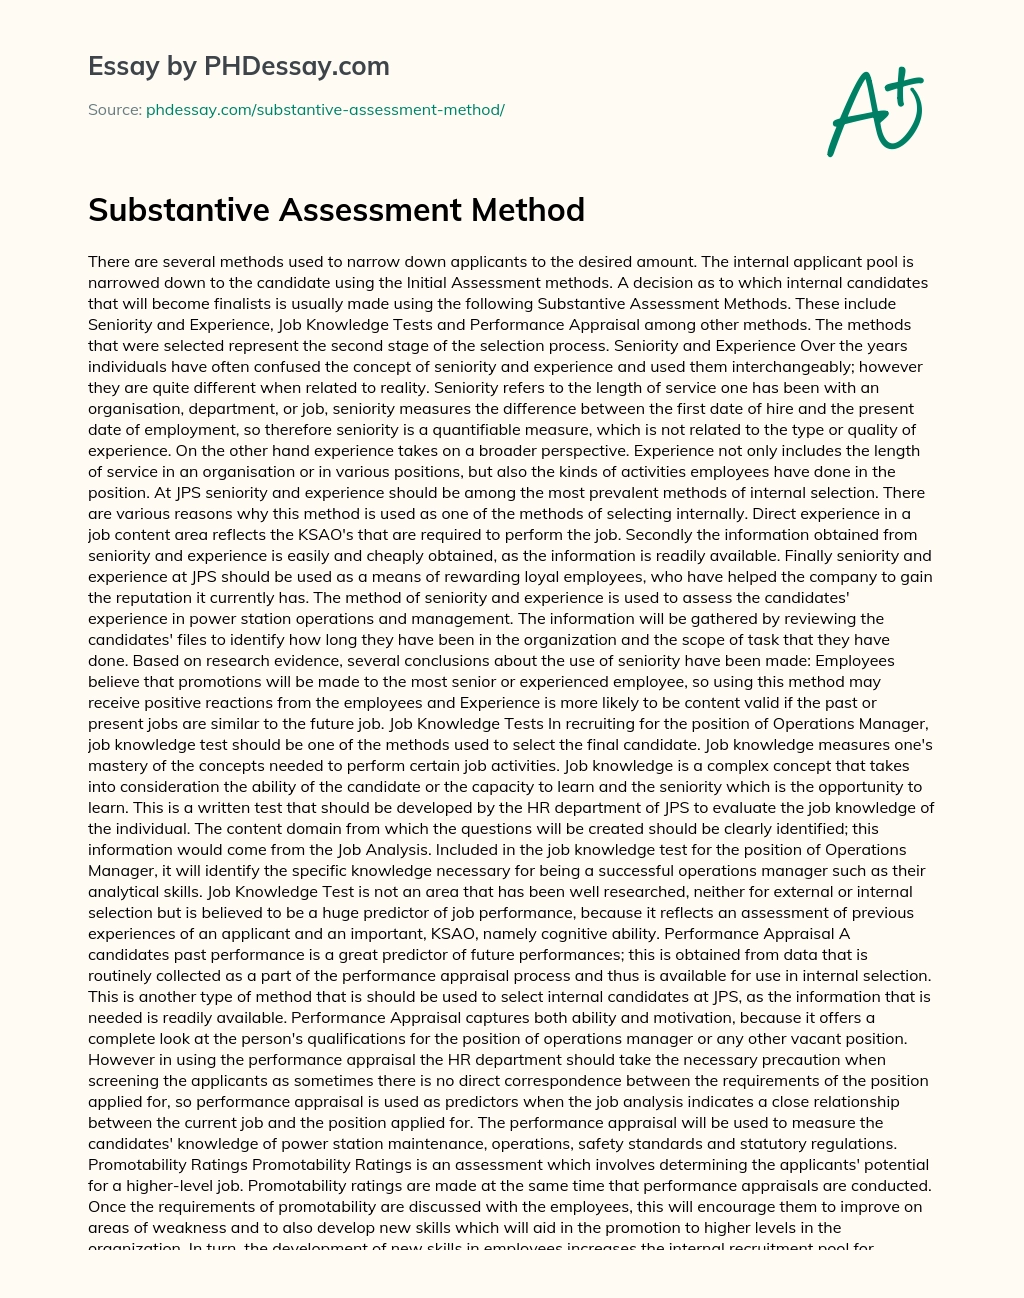 Substantive Assessment Method essay